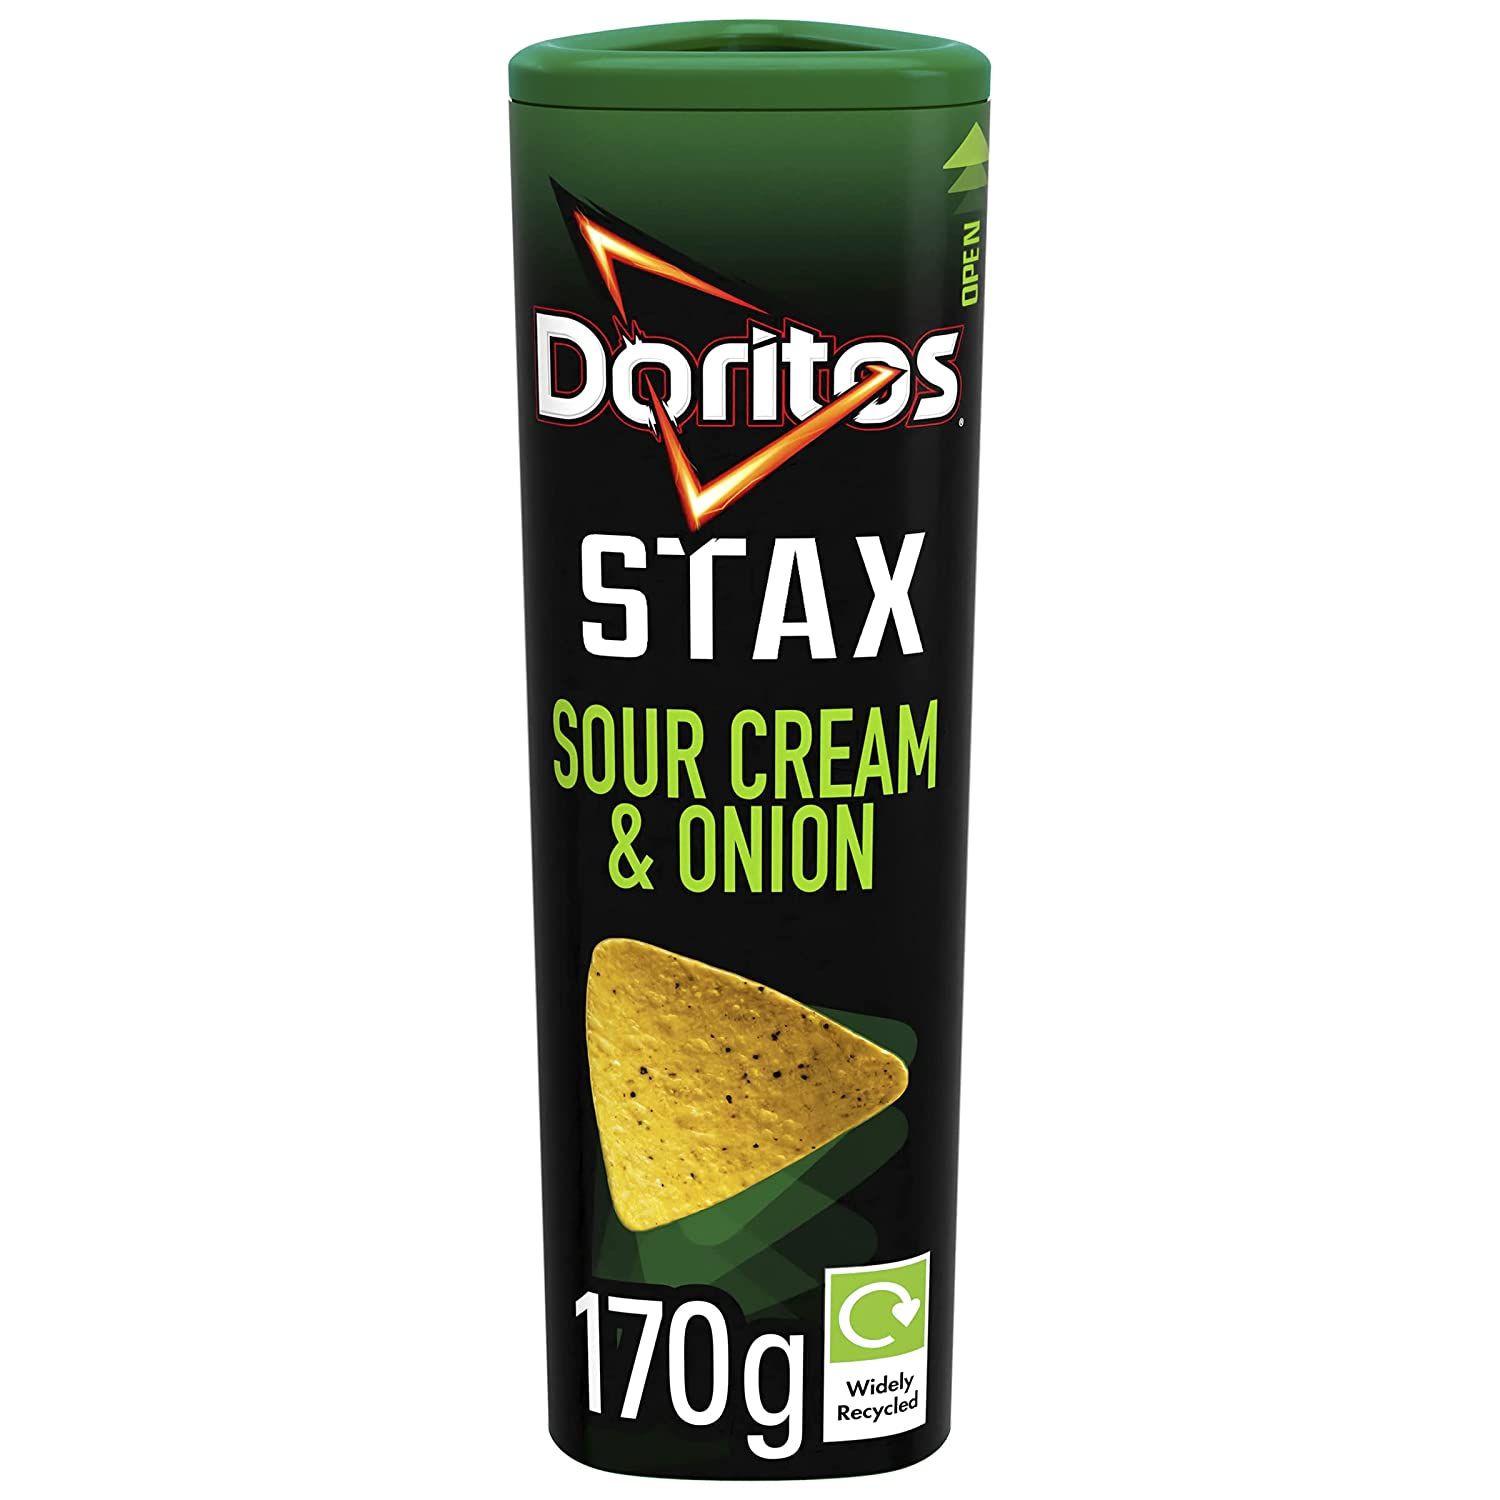 Doritos STAX Sour Cream & Onion Chips Image